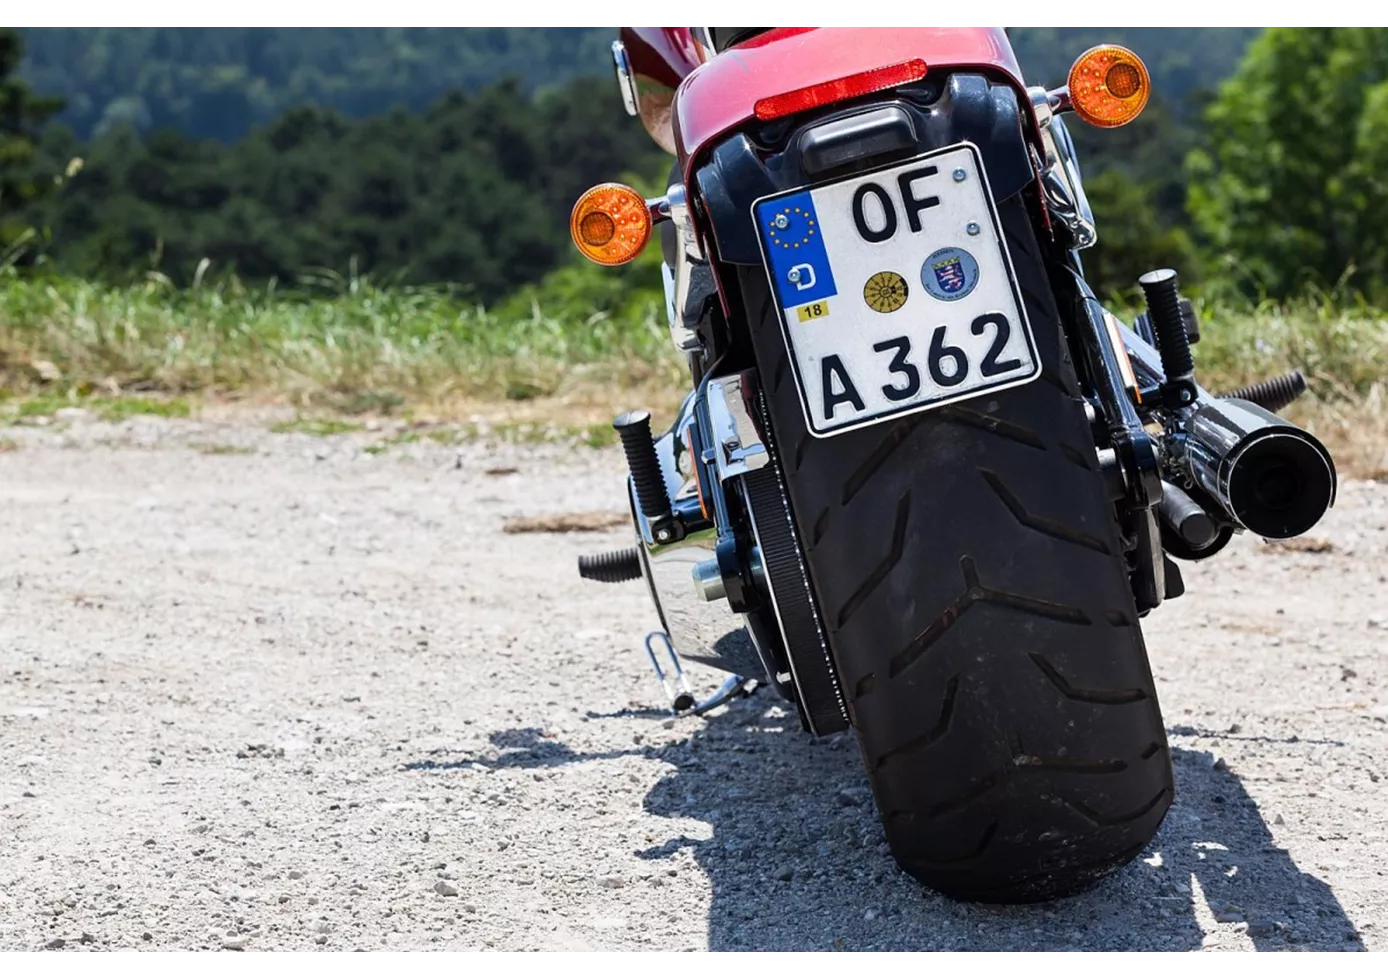 Harley-Davidson Softail Breakout FXSB 2013